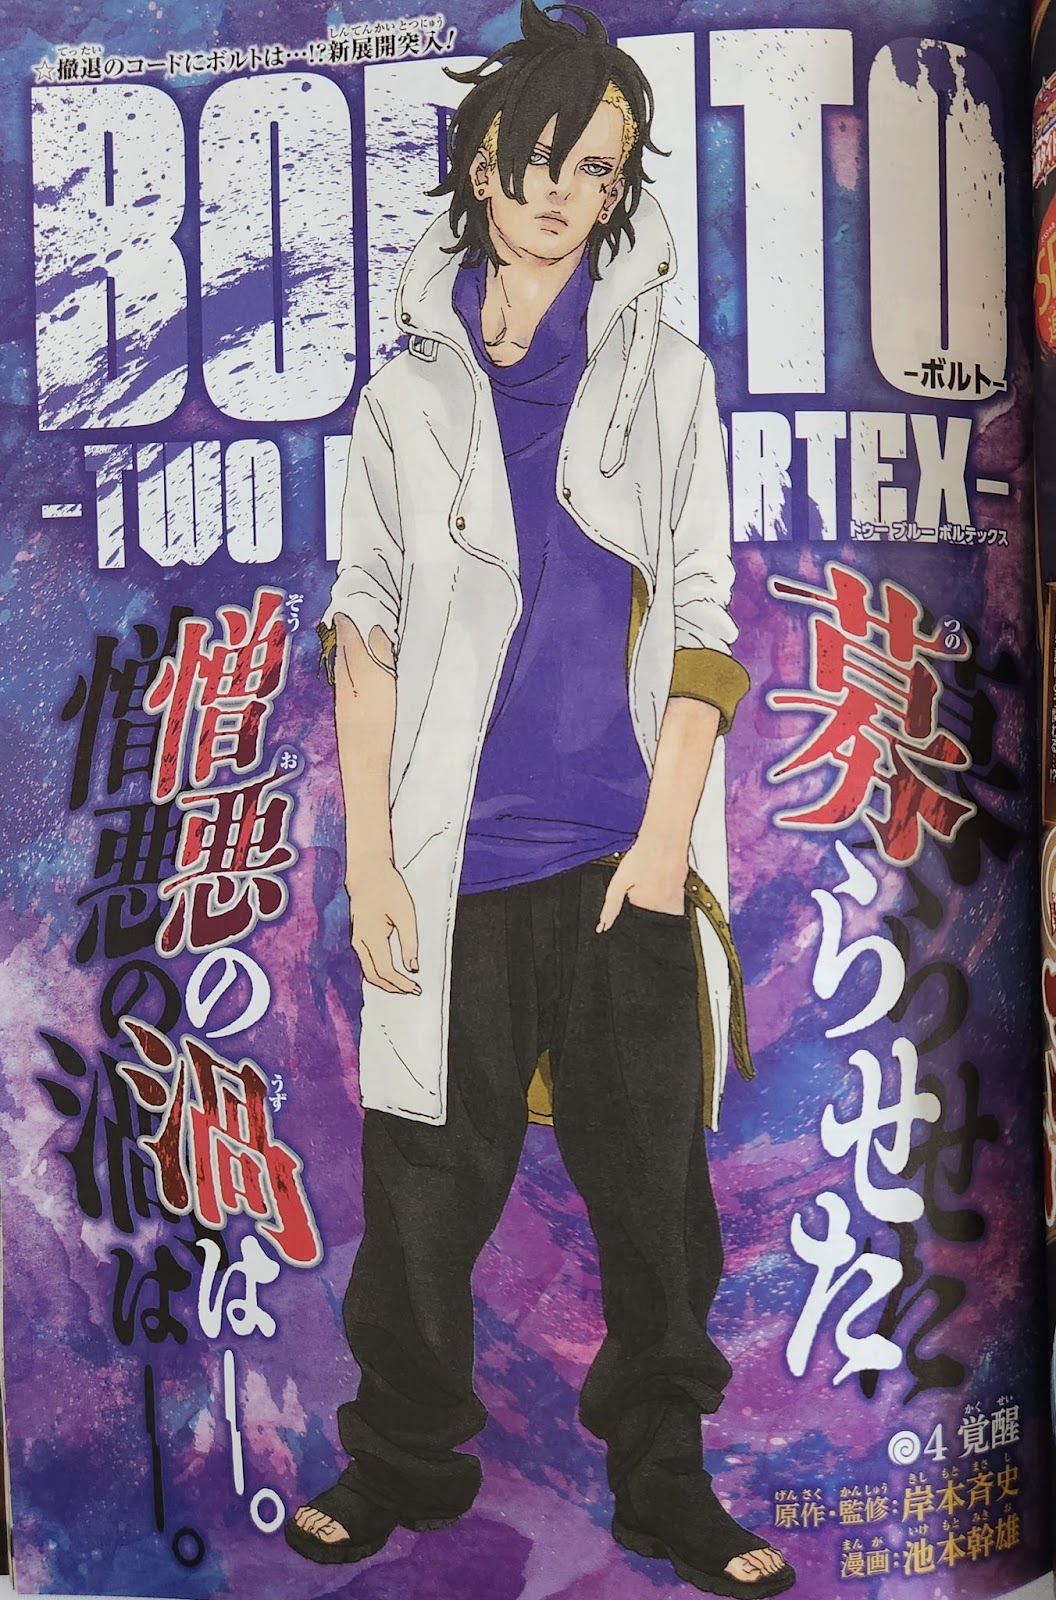 Animeblue on X: Boruto-ボルト- Naruto Next Generations#250 #BORUTO 2/2   / X